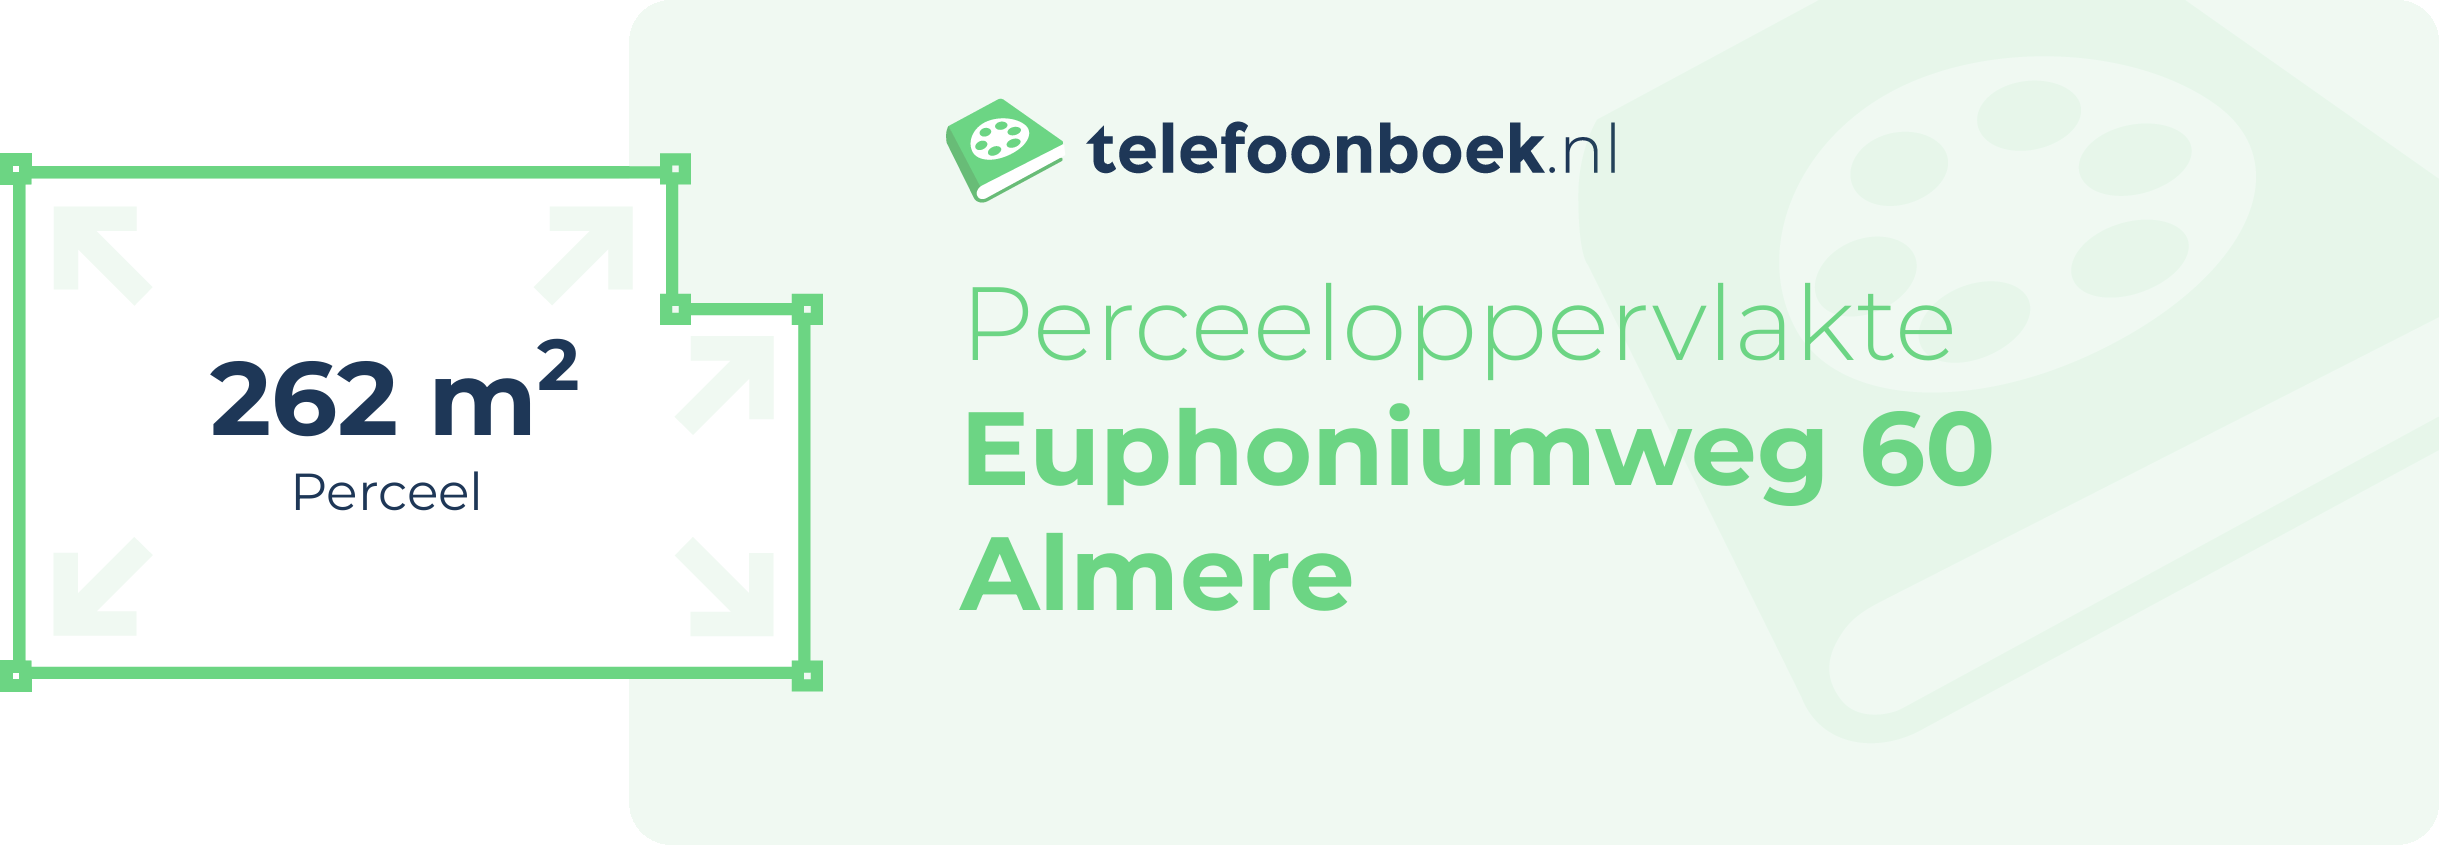 Perceeloppervlakte Euphoniumweg 60 Almere